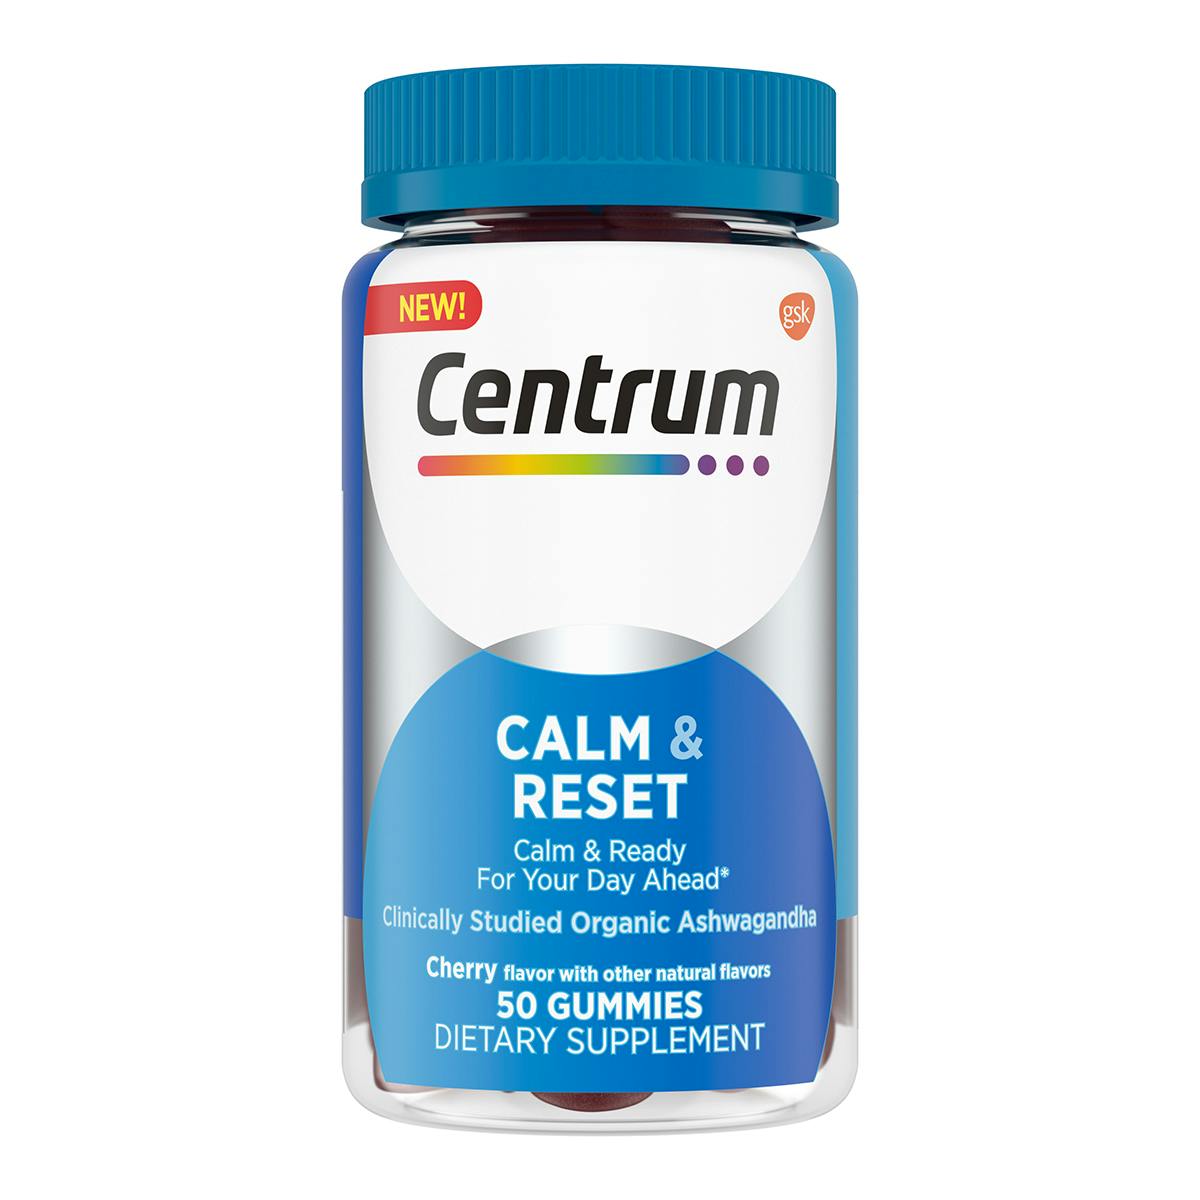 Bottle of Centrum Adult Gummy Calm & Reset Supplements